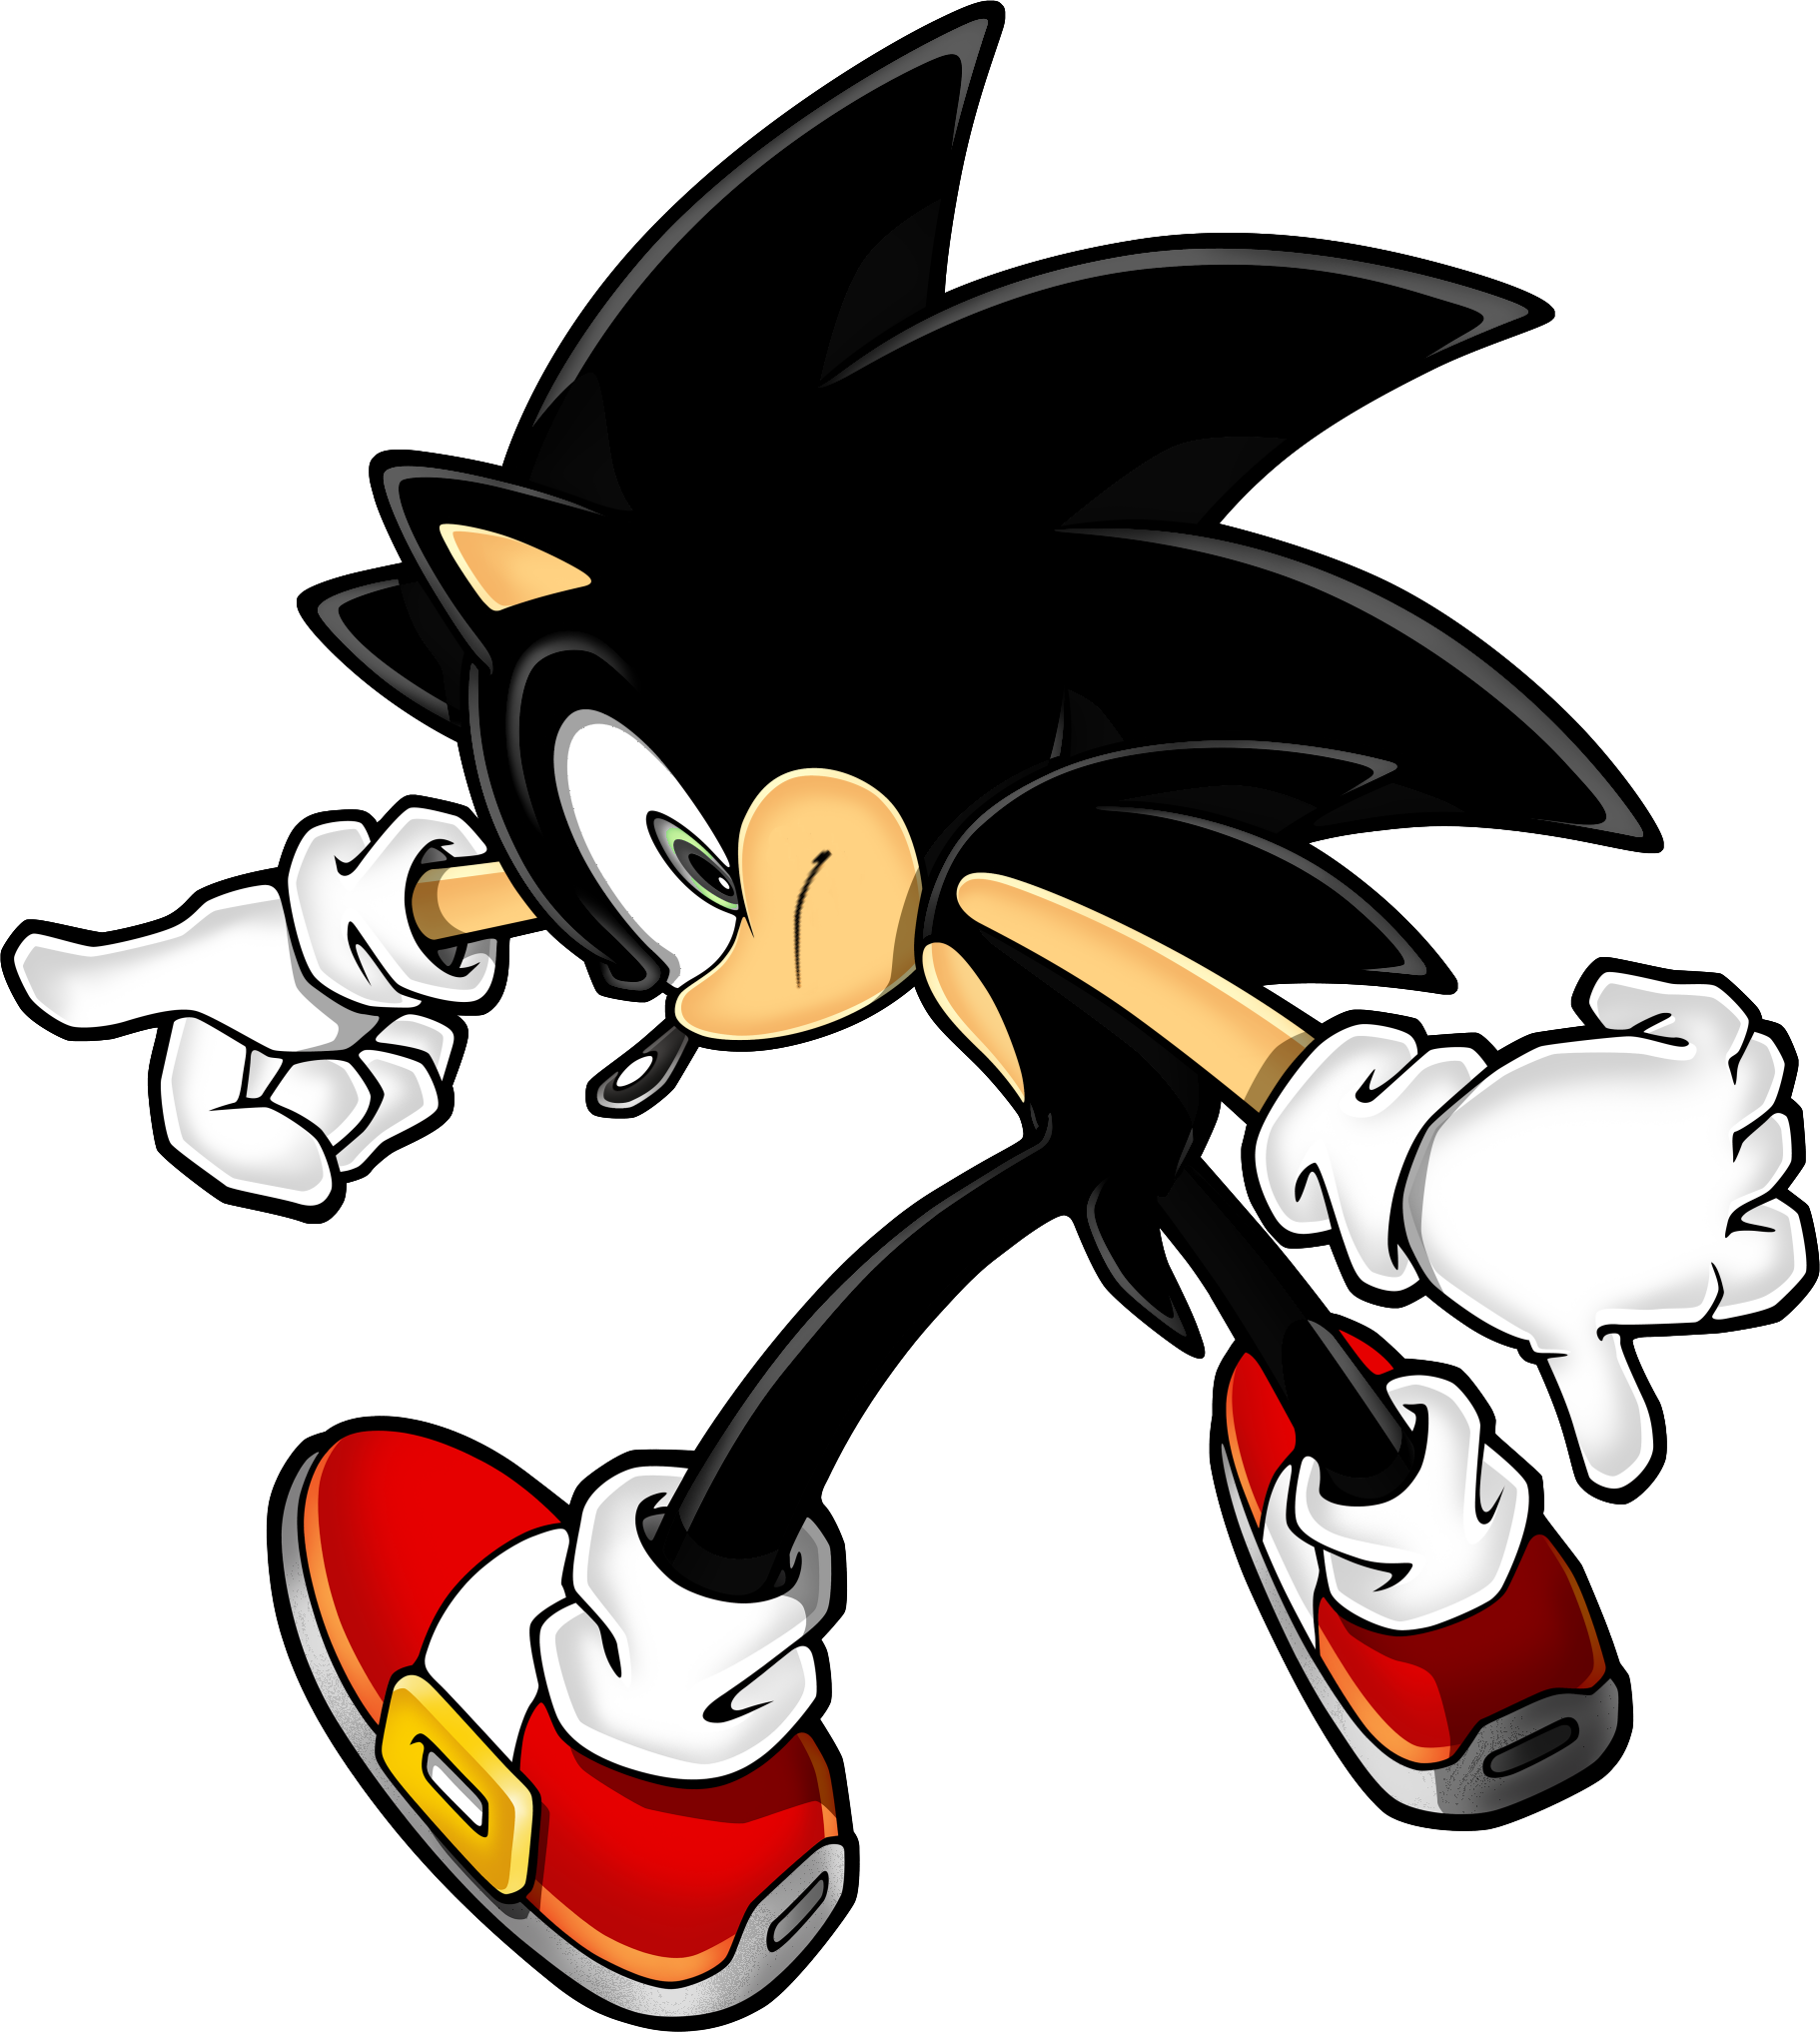 Sonic The Hedgehog Transparent Image